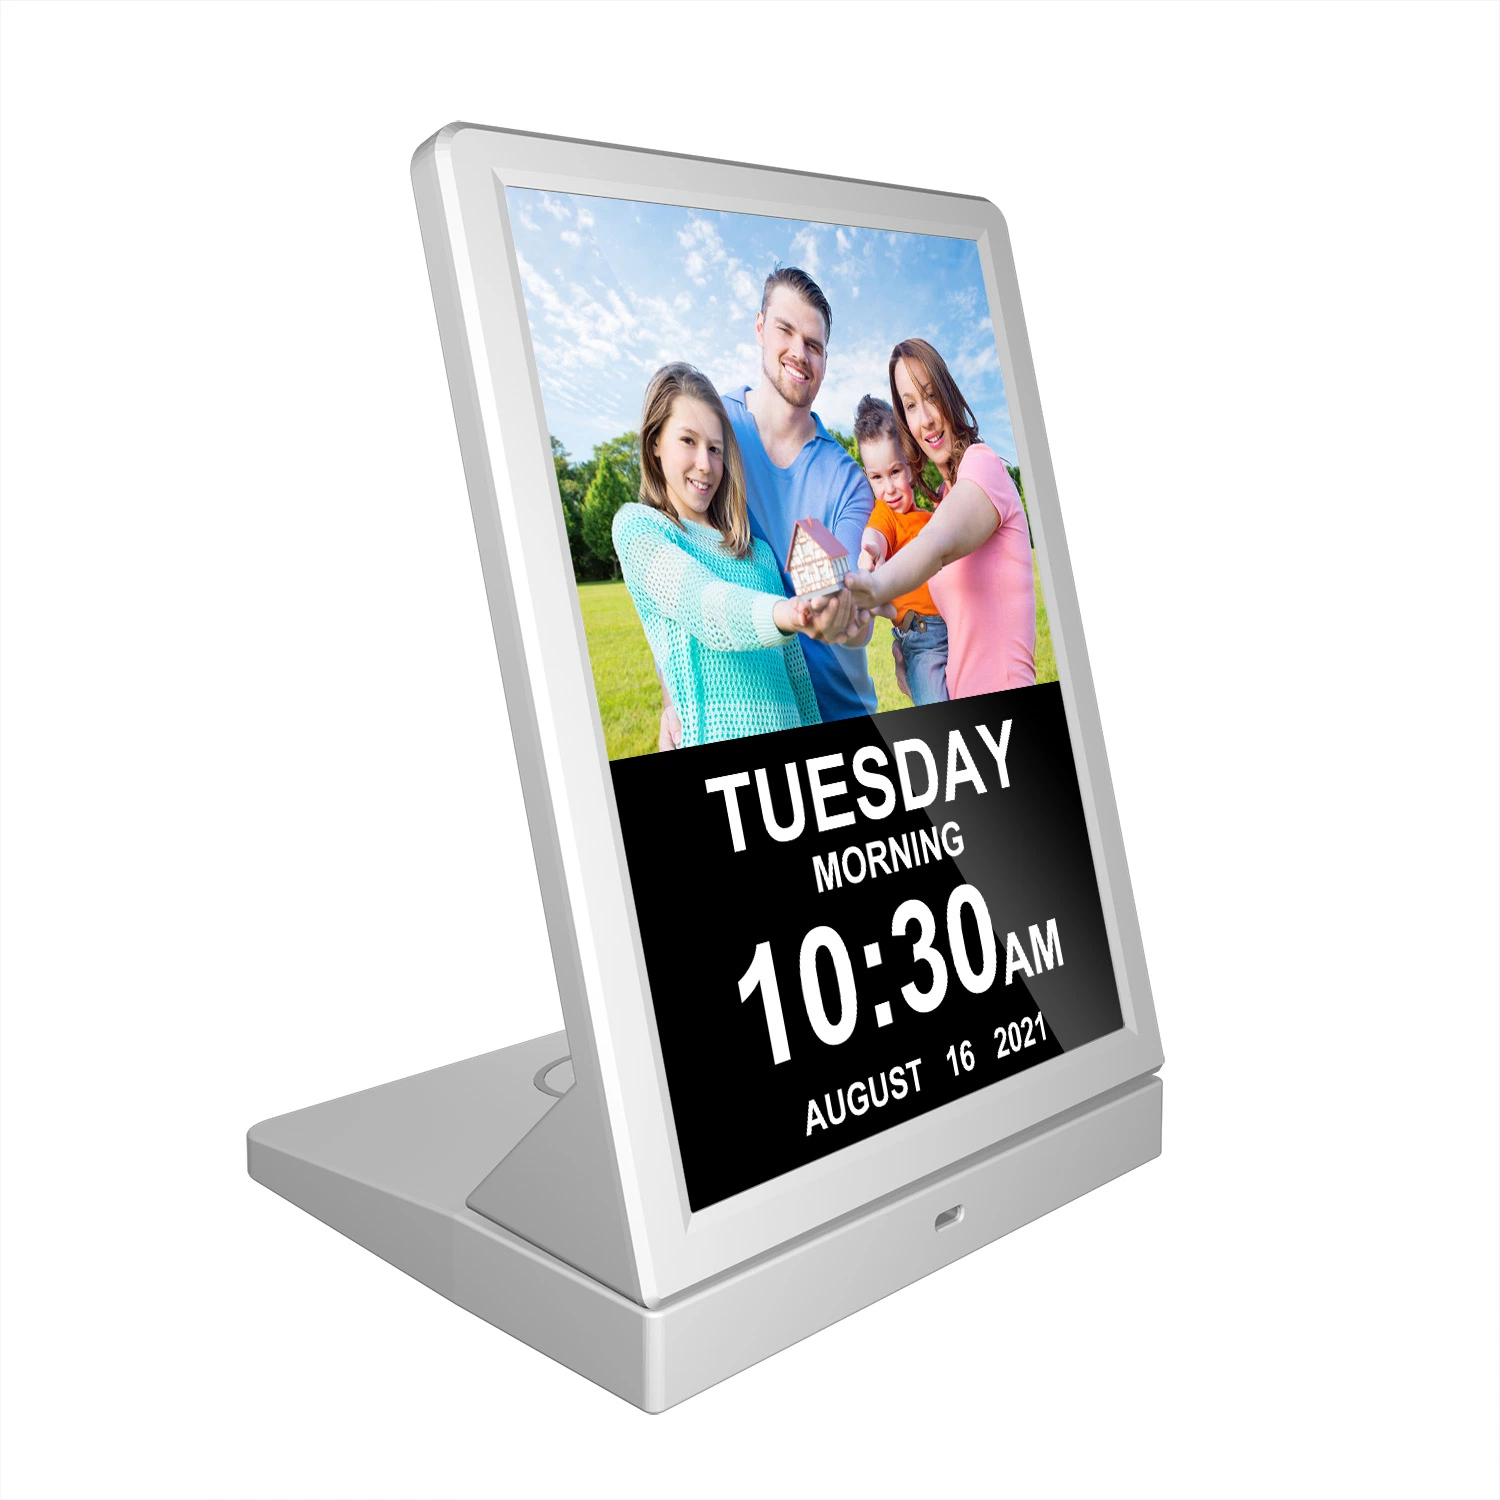 Alarm Clock New Desktop WiFi Digital Photo Frame with Wireless Charger